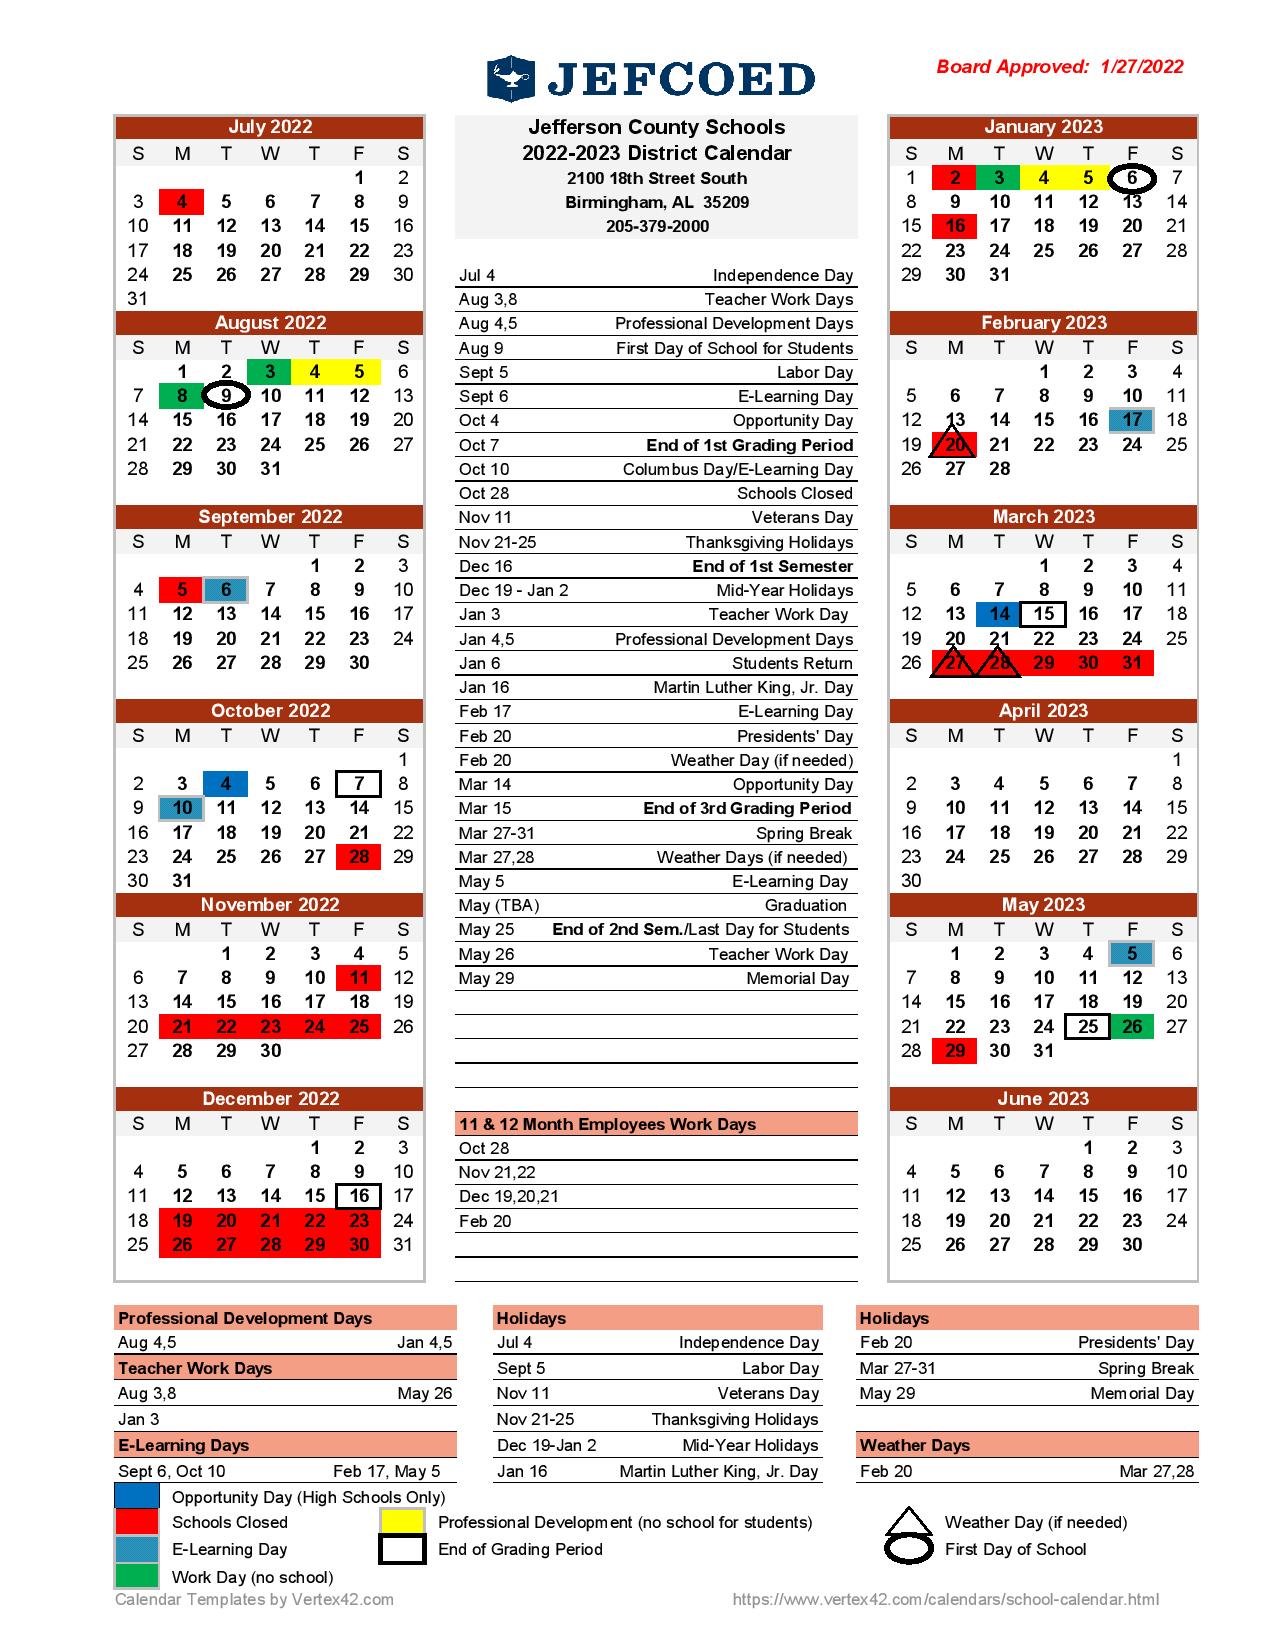 Jefferson County Schools Calendar Holidays 20222023 PDF